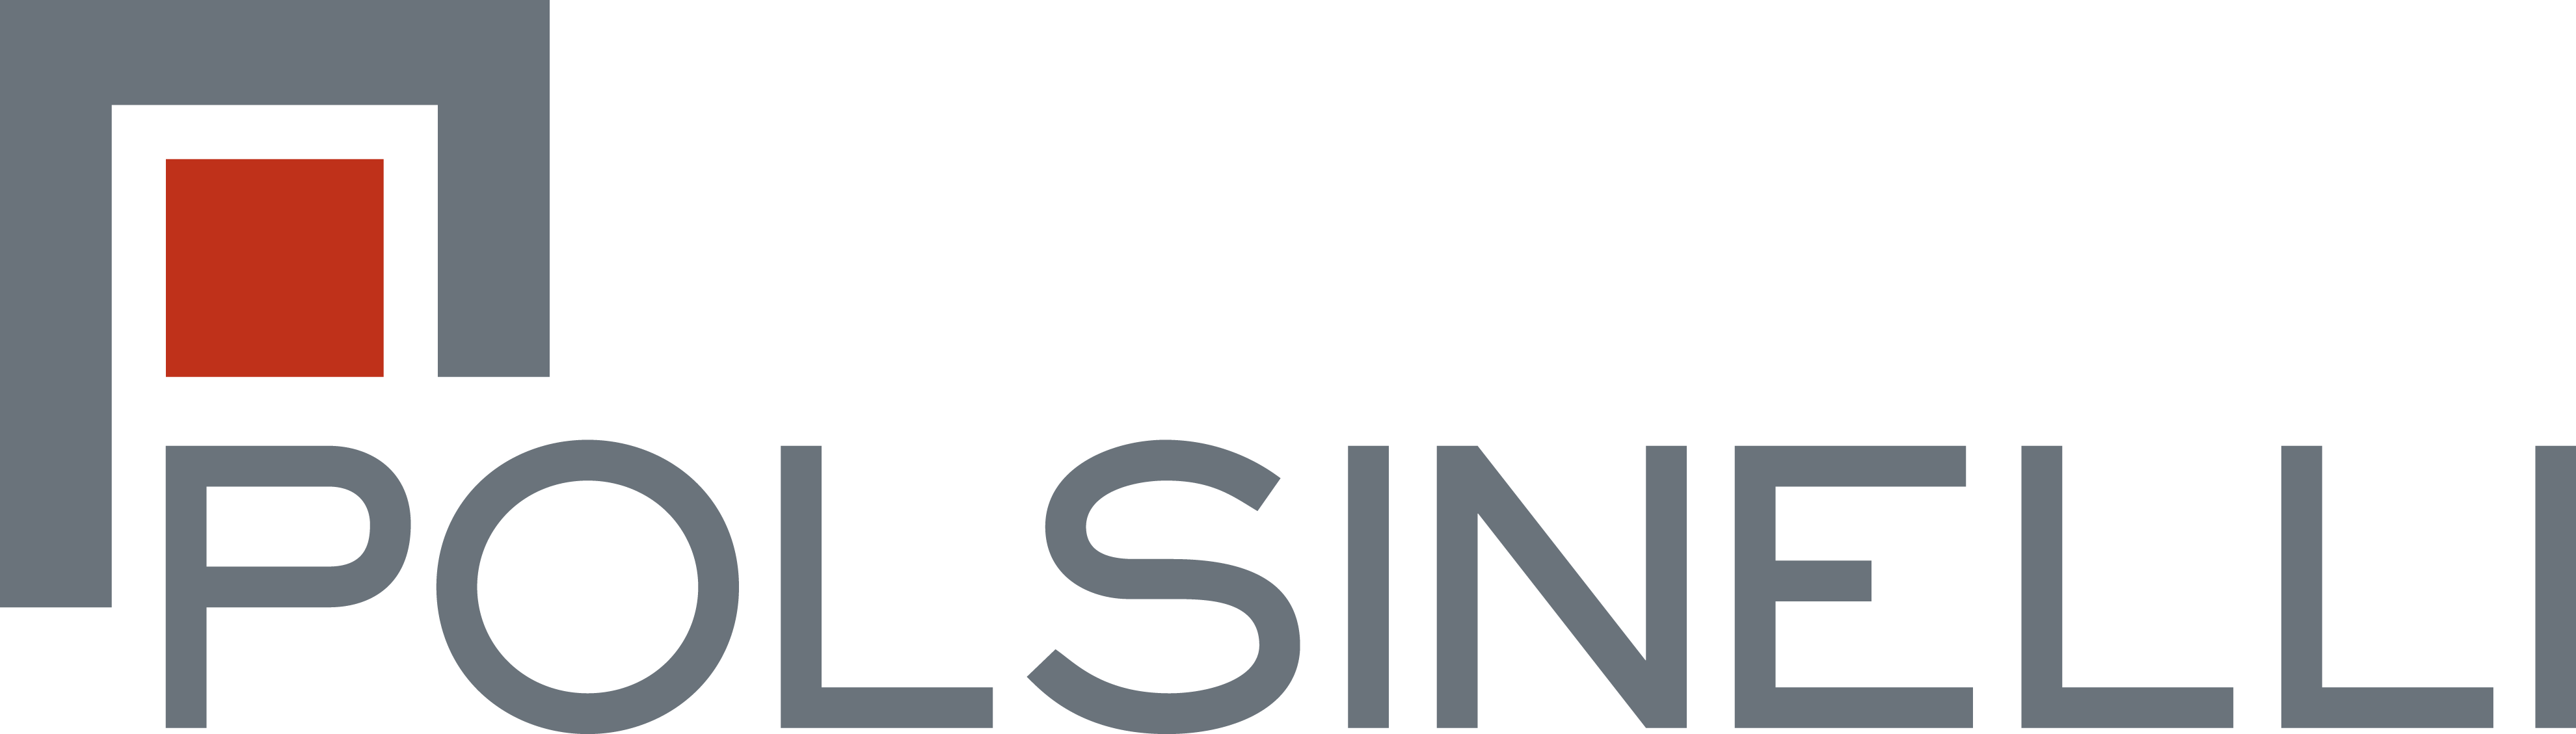 Polsinelli Logo